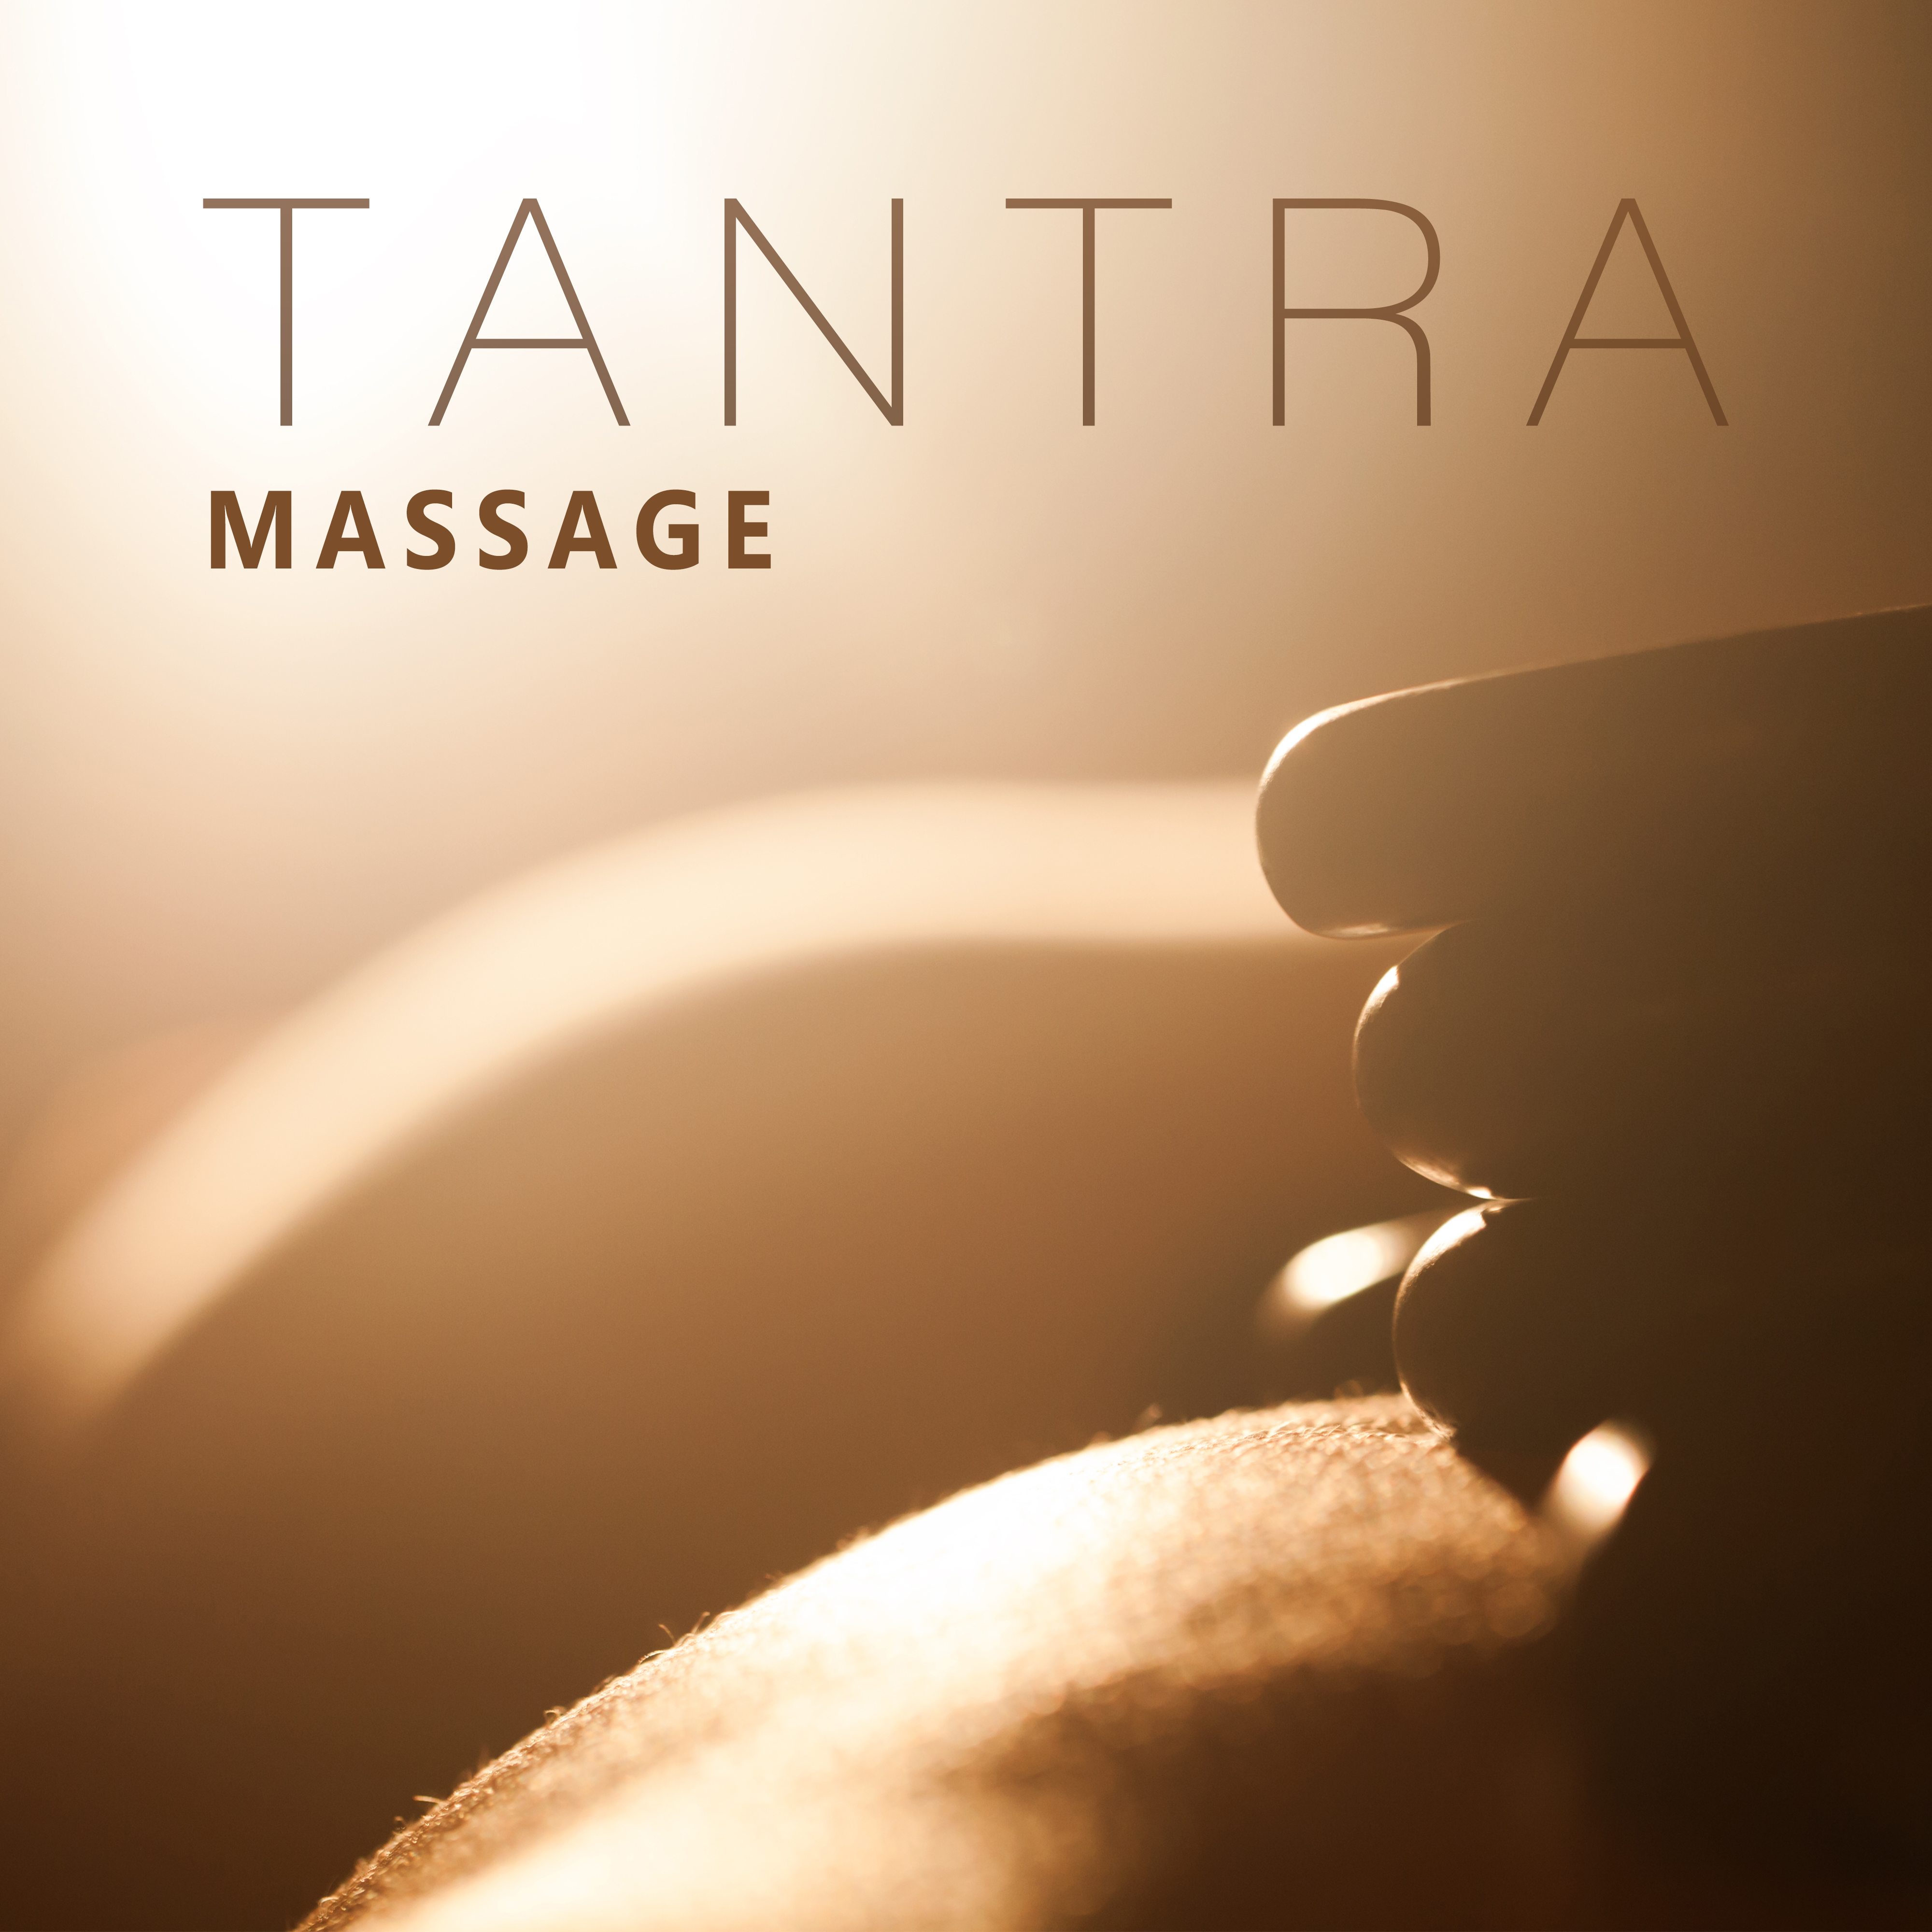 Tantra Massage  Spiritual Sounds of New Age Music for Tantra Massage, Sensual Sounds for Massage, Spa, Wellness